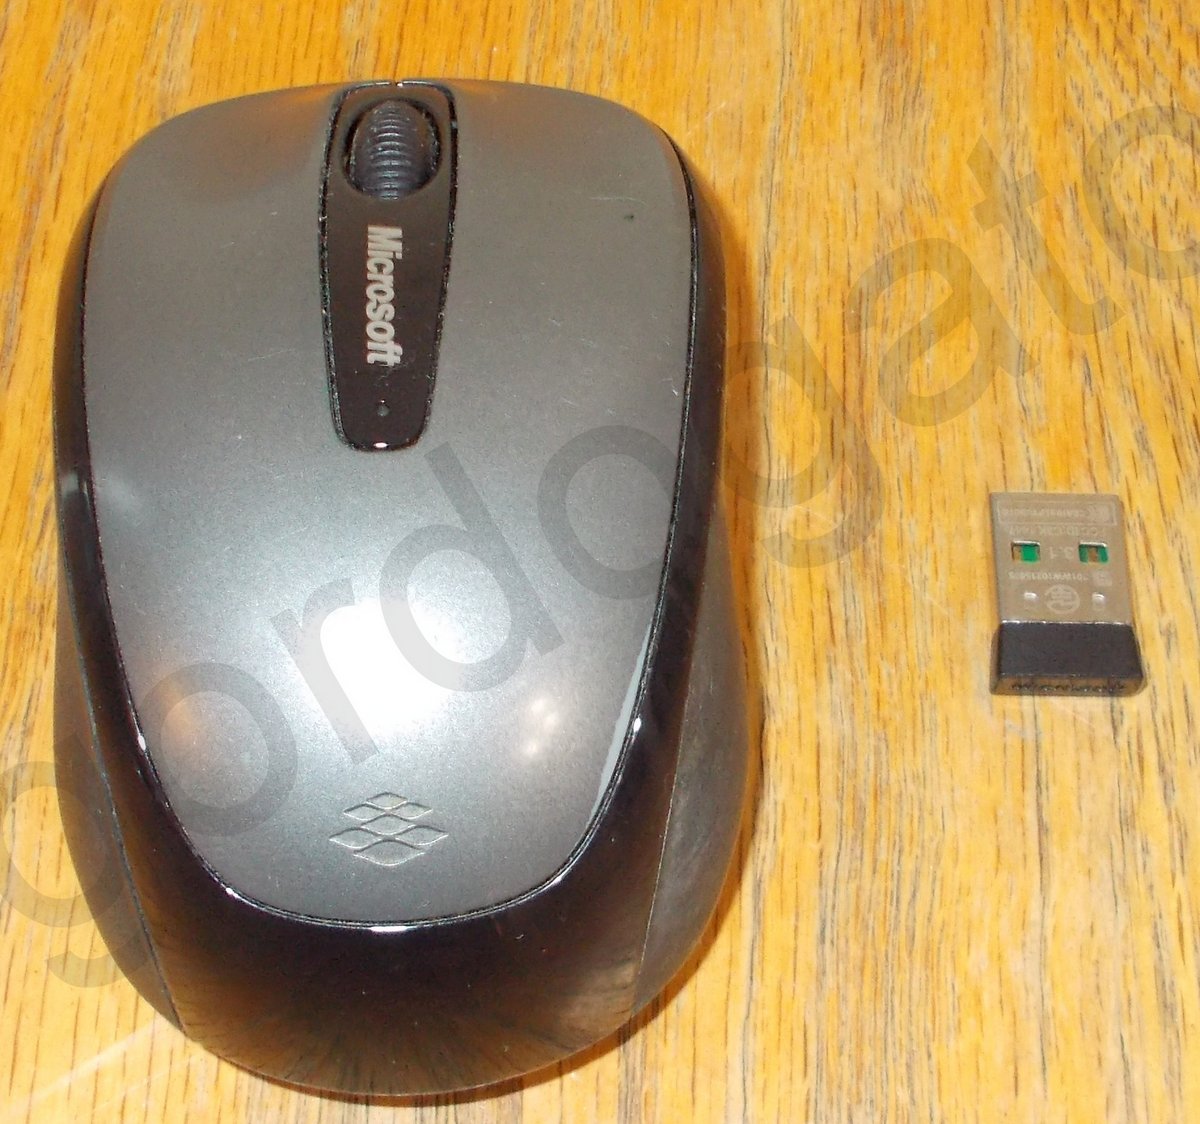 Microsoft Wireless USB Mobile Mouse 3500 w/ Nano Receiver Black